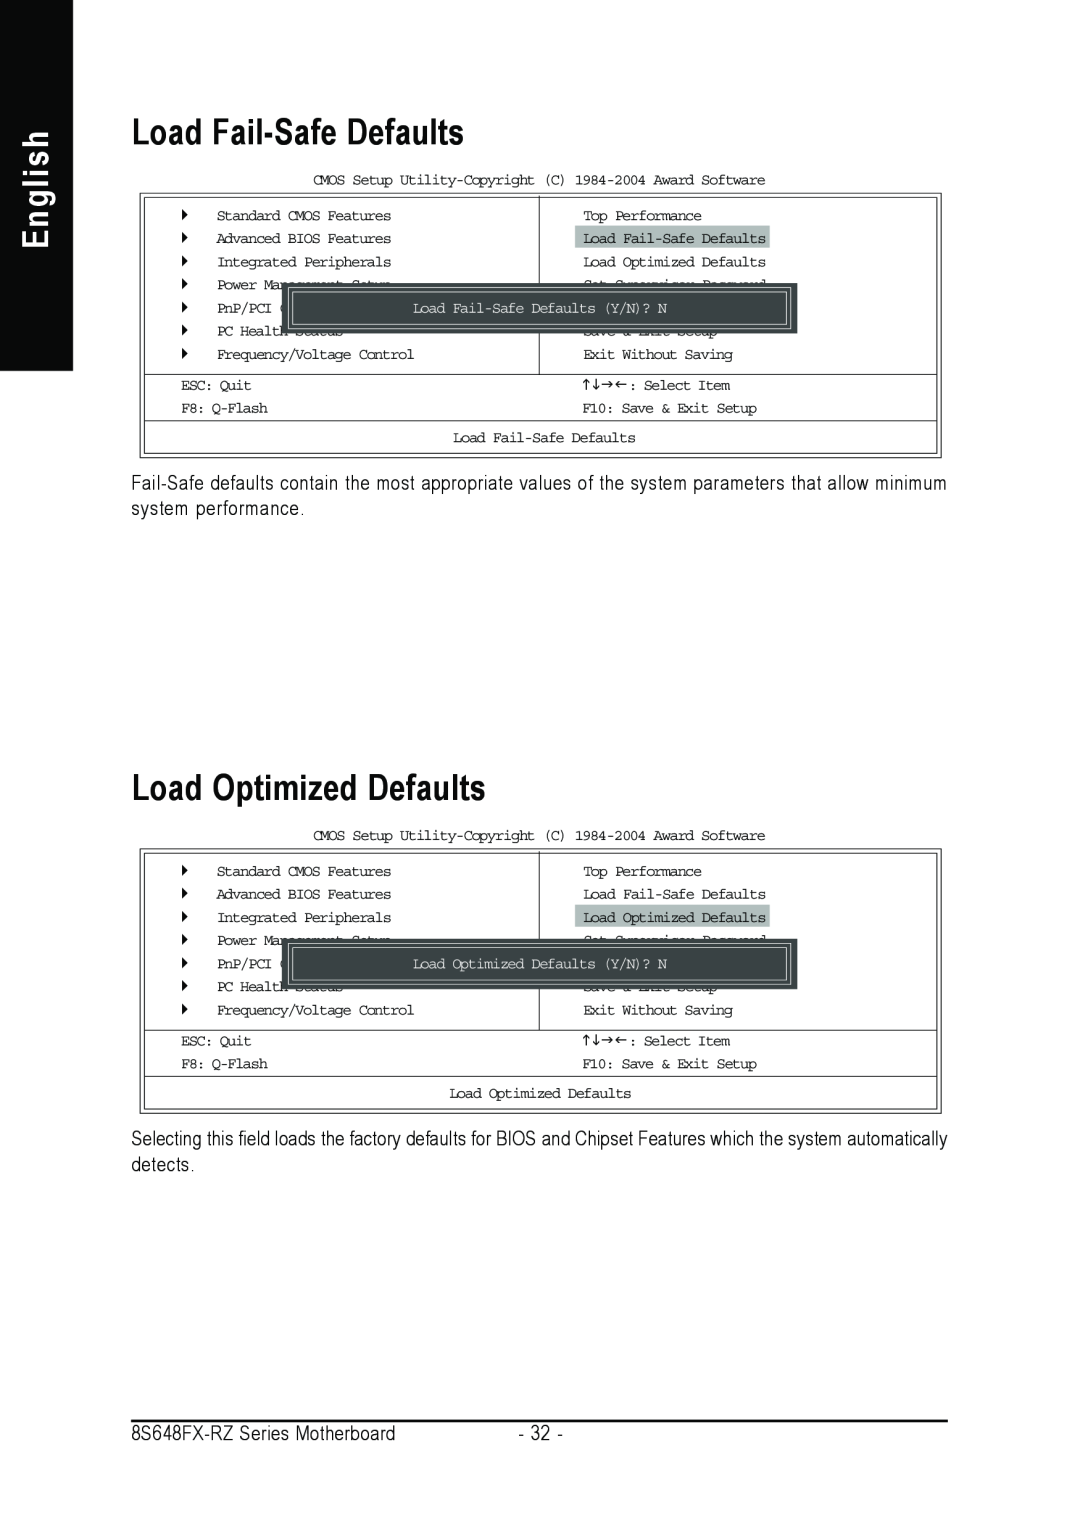 Gigabyte 8S648FX-RZ-C user manual Load Fail-Safe Defaults, Load Optimized Defaults, English 